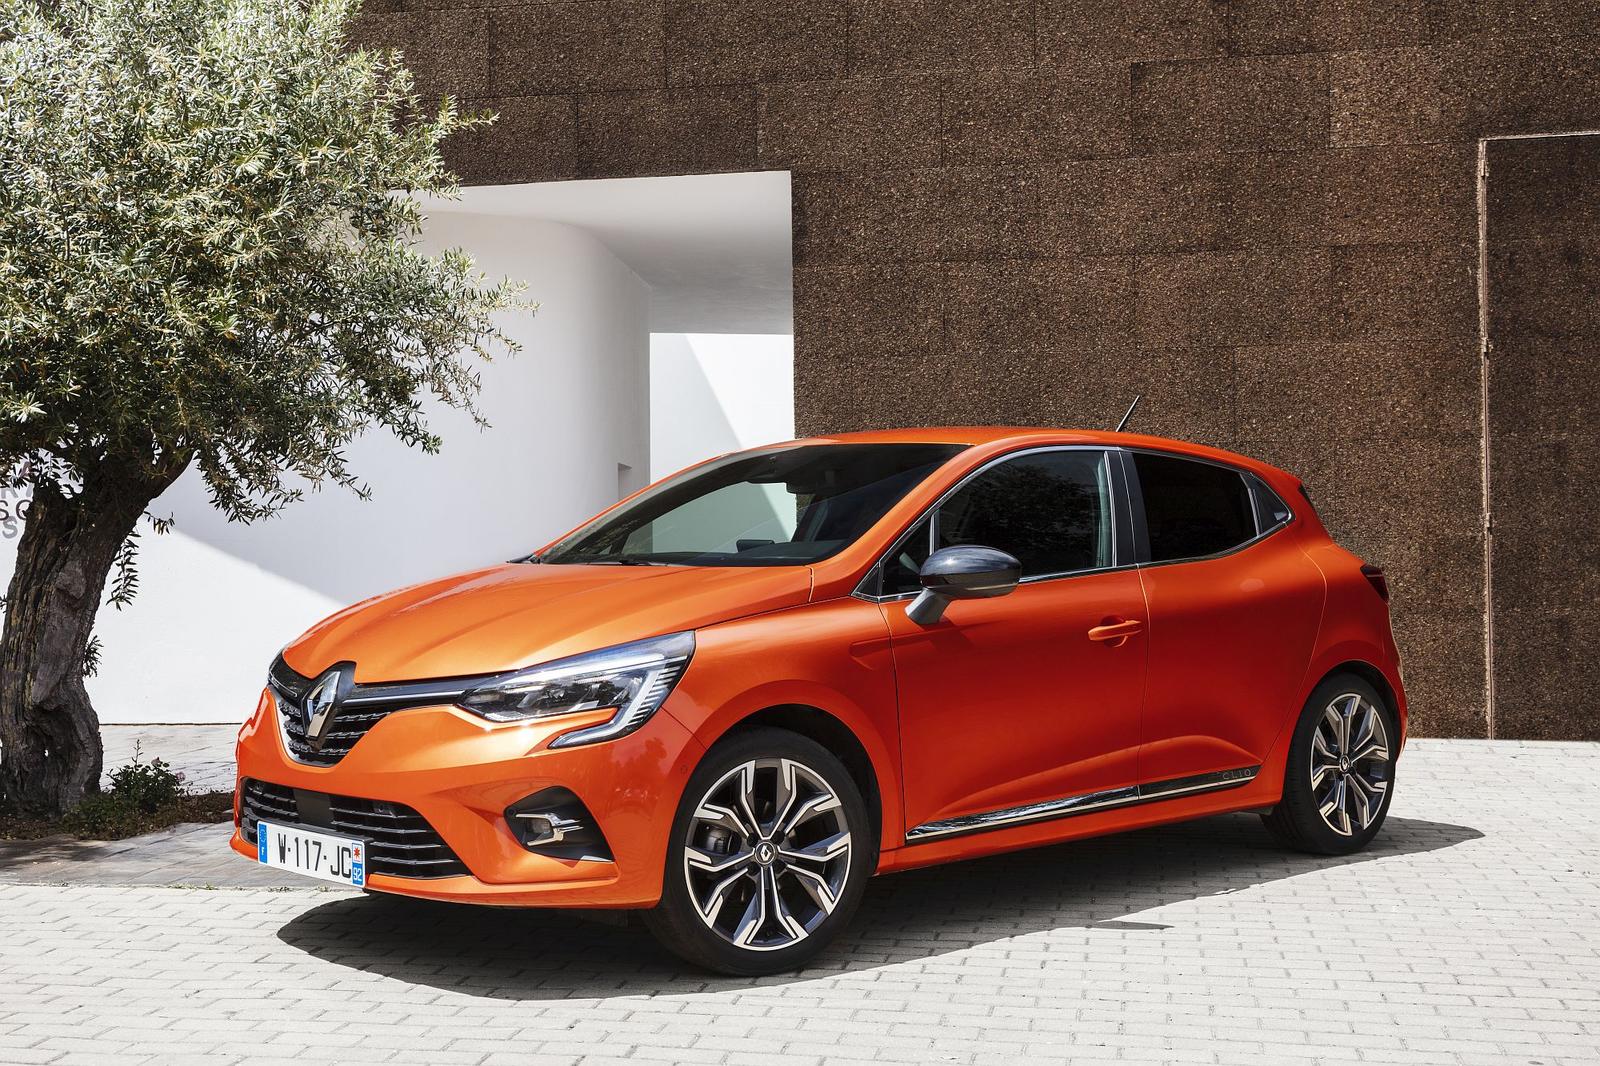 All-new Renault Clio Intens – Orange Valencia (18)